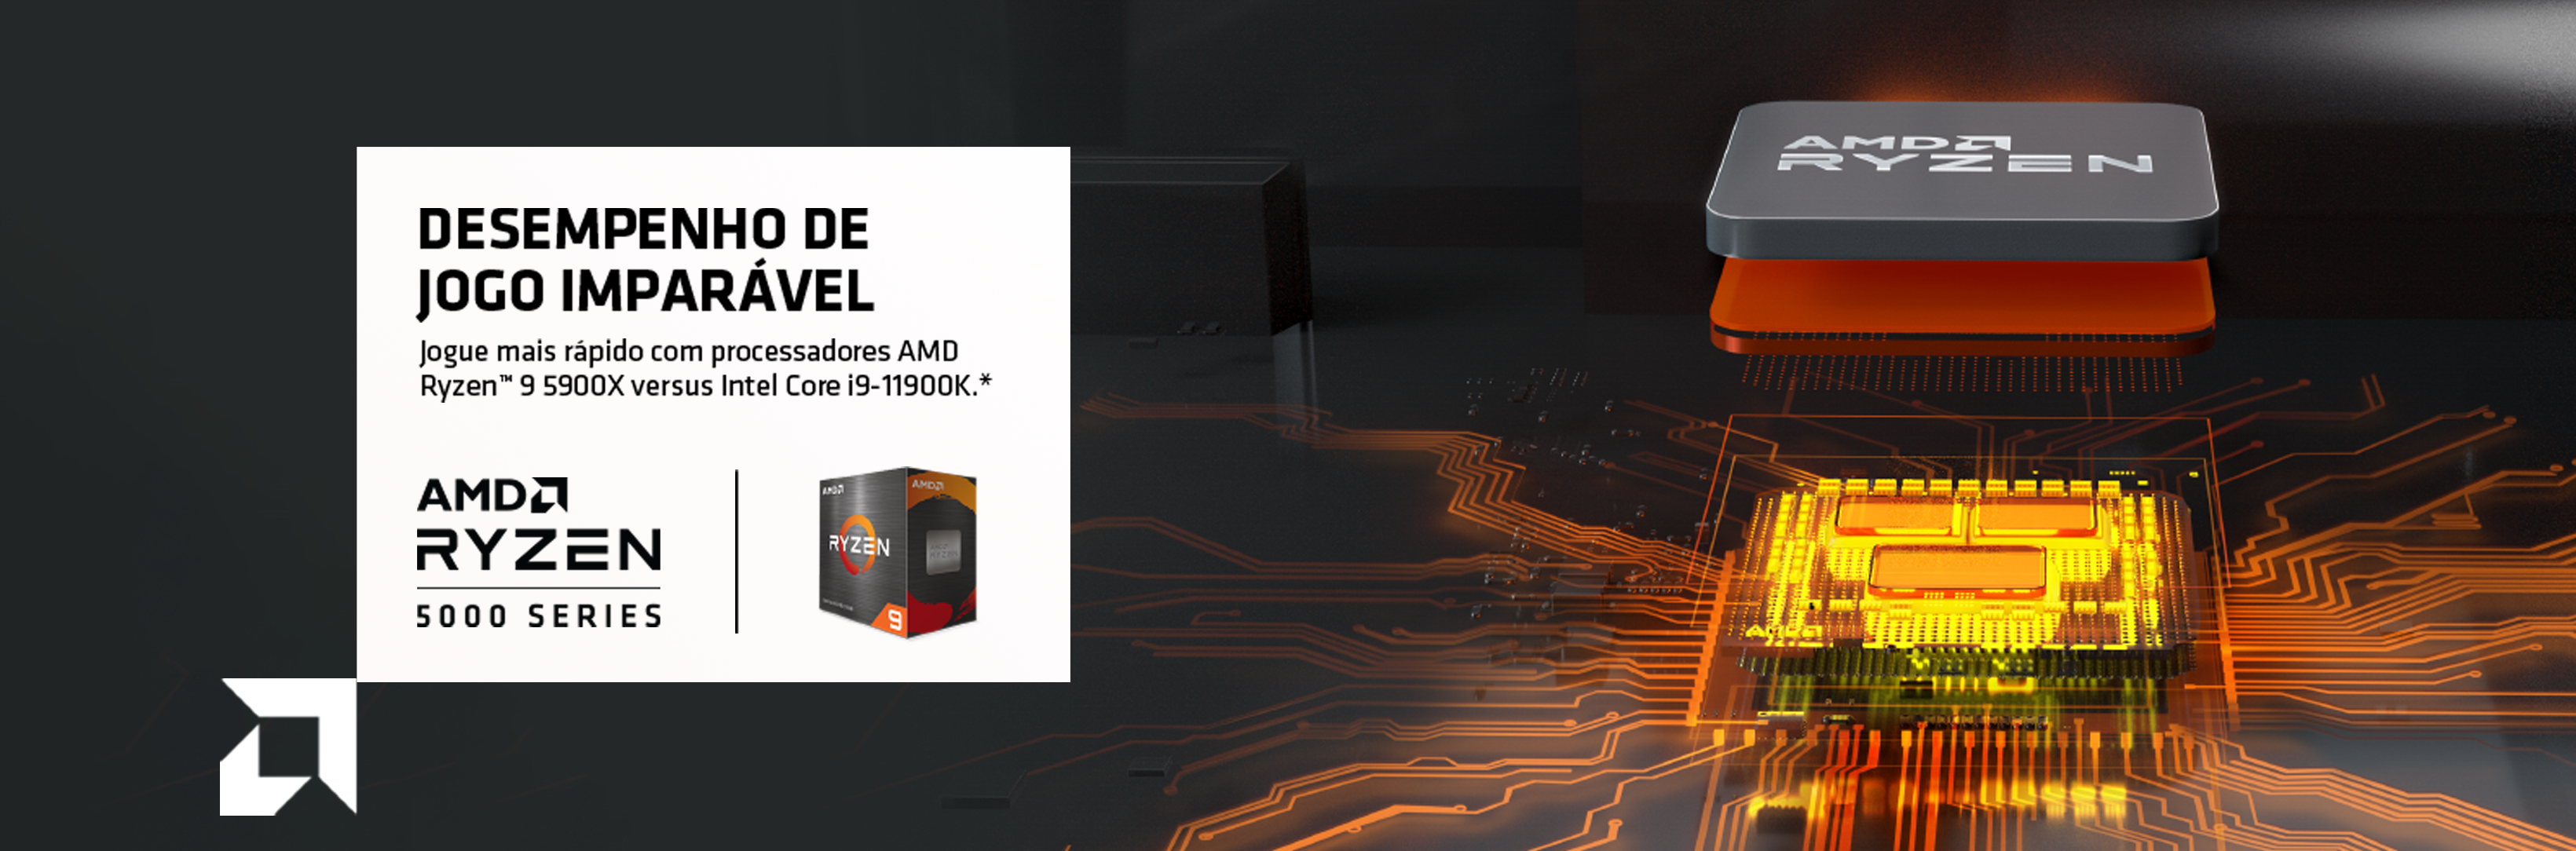 AMD-Ryzen-5000Series